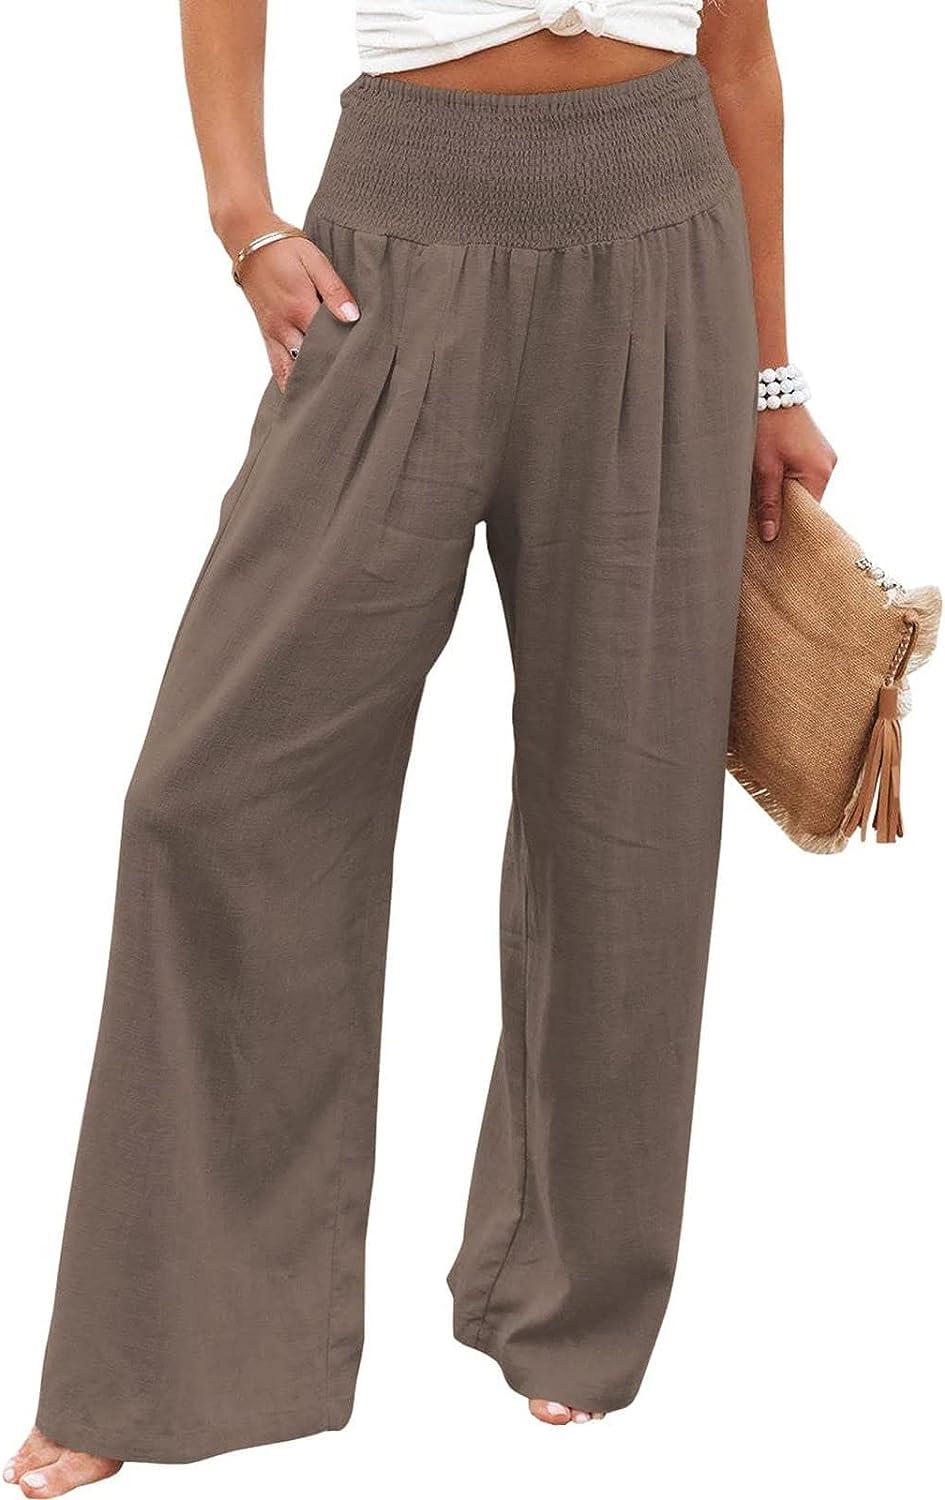 Women High Waist Cotton Linen Trousers Ladies Baggy Wide Leg Bottom Pants  S-3XL 